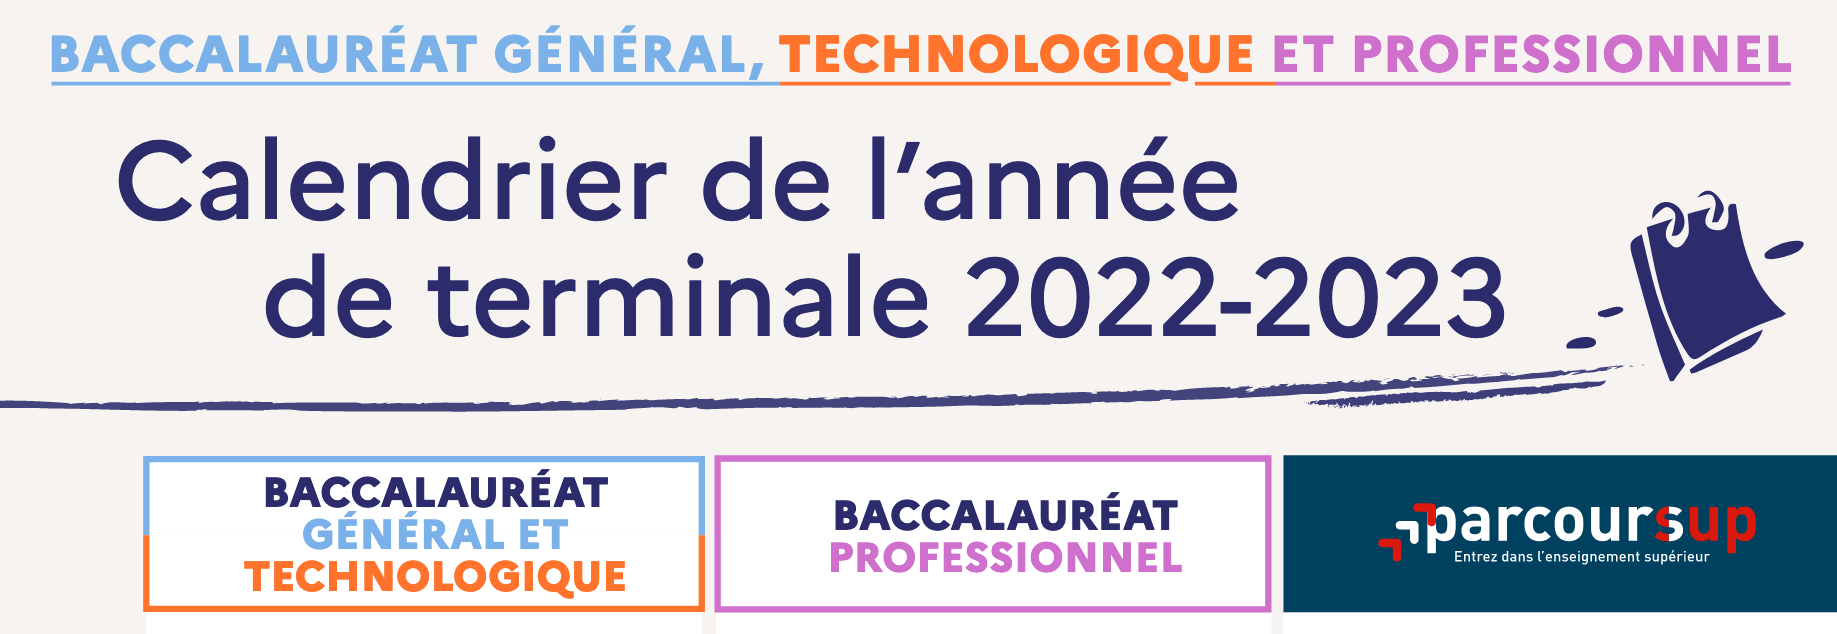 Screenshot 2022-10-22 at 08-11-14 2022_bac_infog_calendrier - calendrier-de-l-ann-e-de-terminale-2022-2023-118120.pdf.png